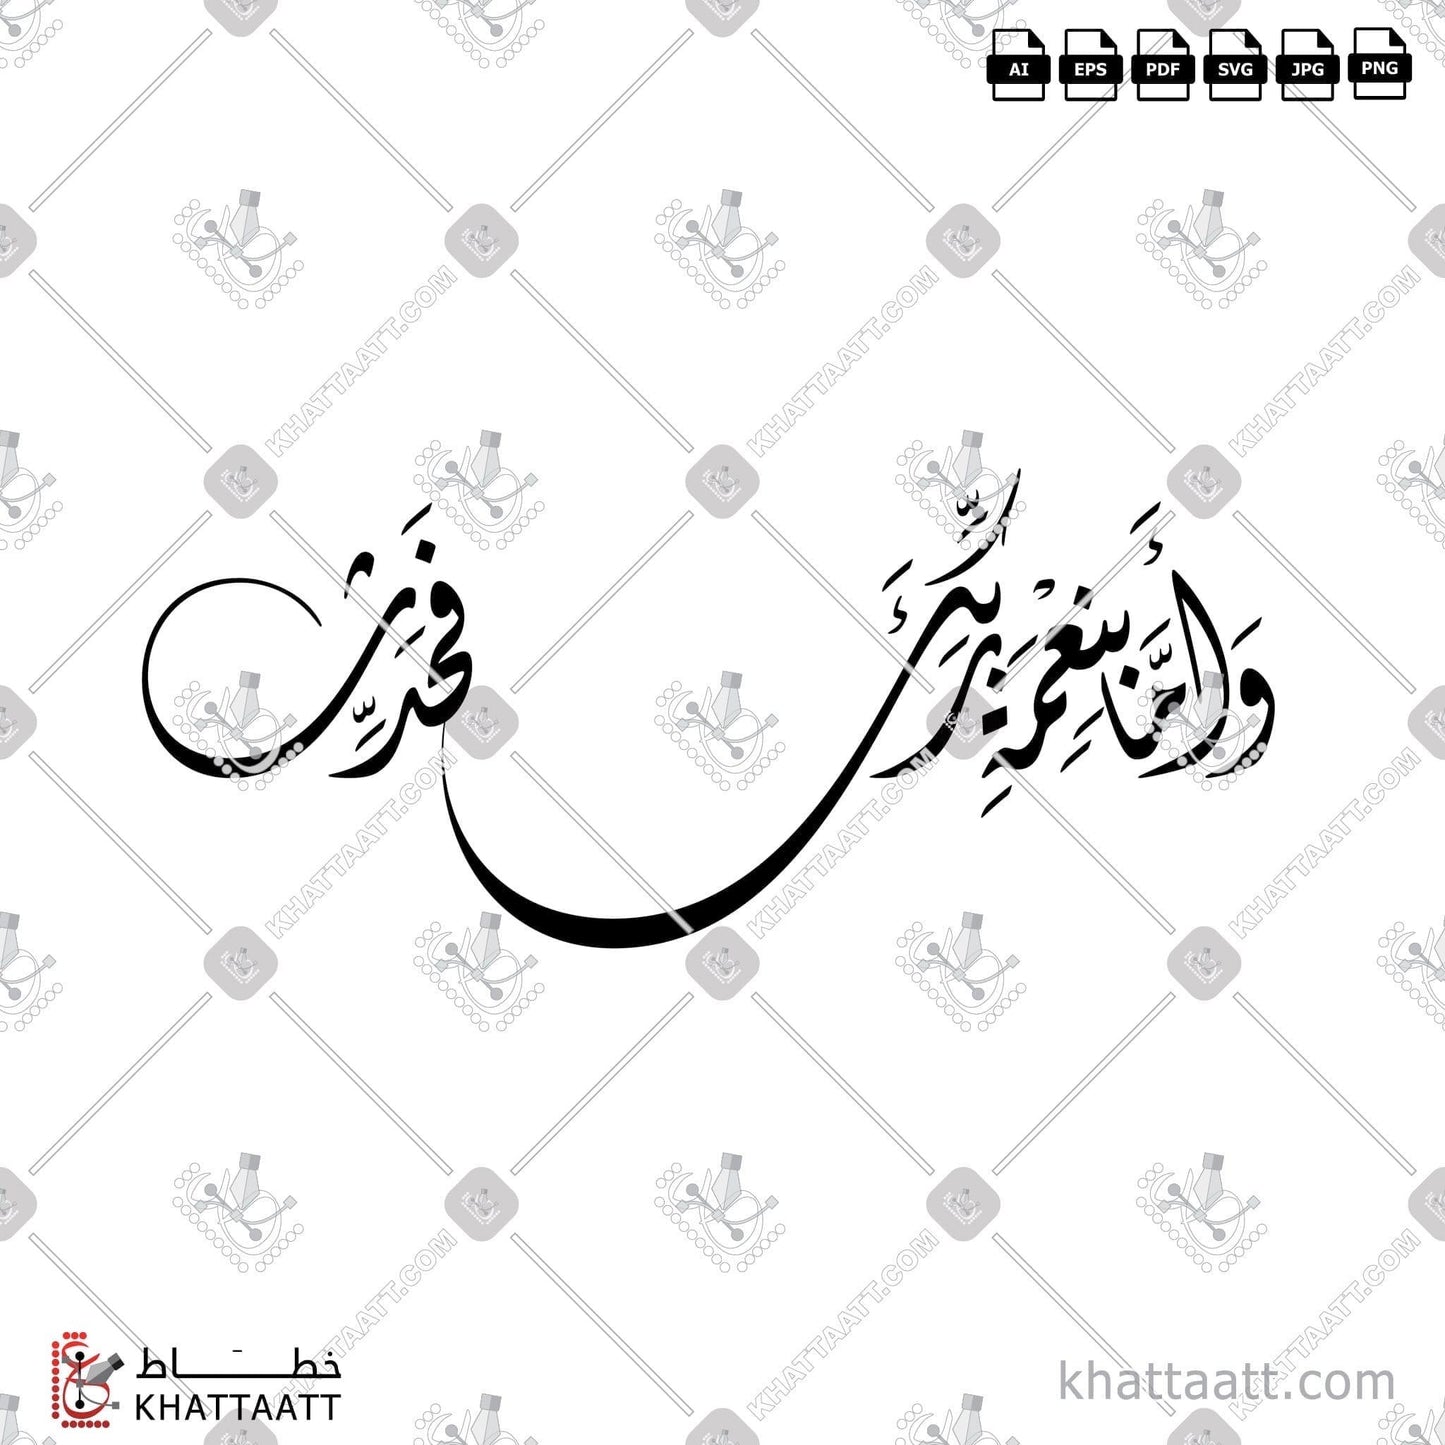 Download Arabic Calligraphy of وأما بنعمة ربك فحدث in Diwani - الخط الديواني in vector and .png